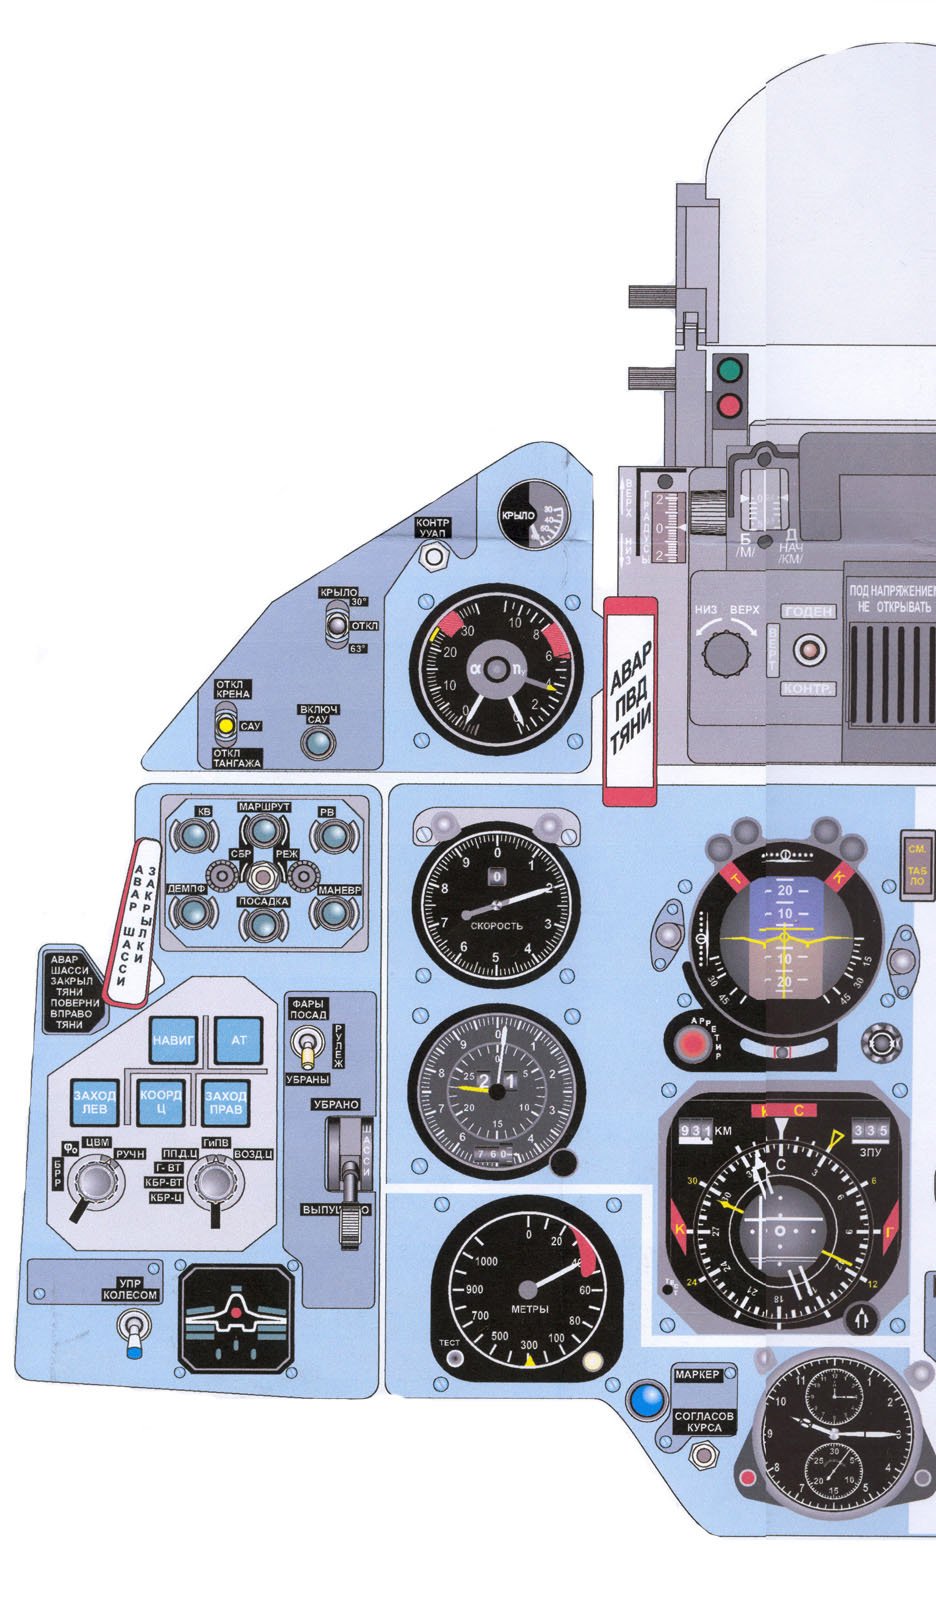 Su22 cockpit instrumentation | Key Aero